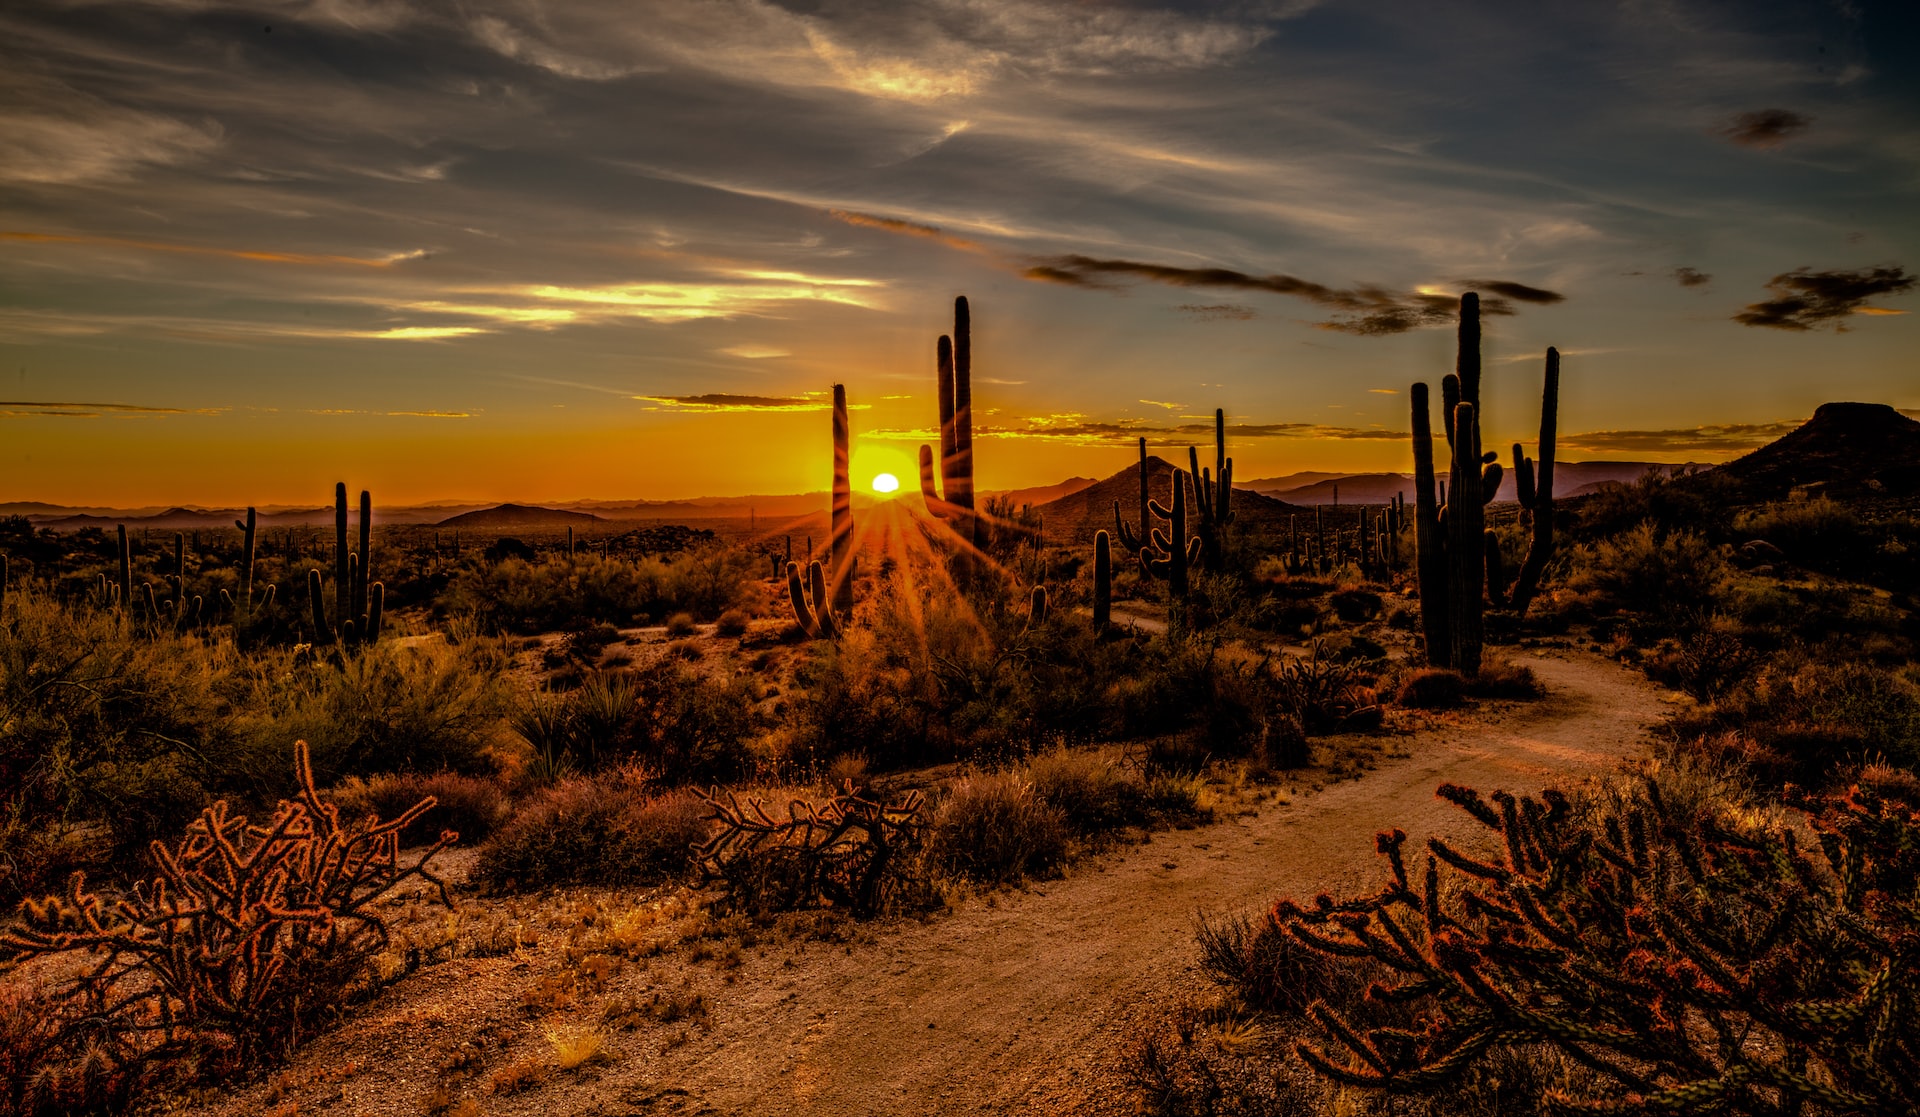 The setting sun in Scottsdale, Arizona's desert.